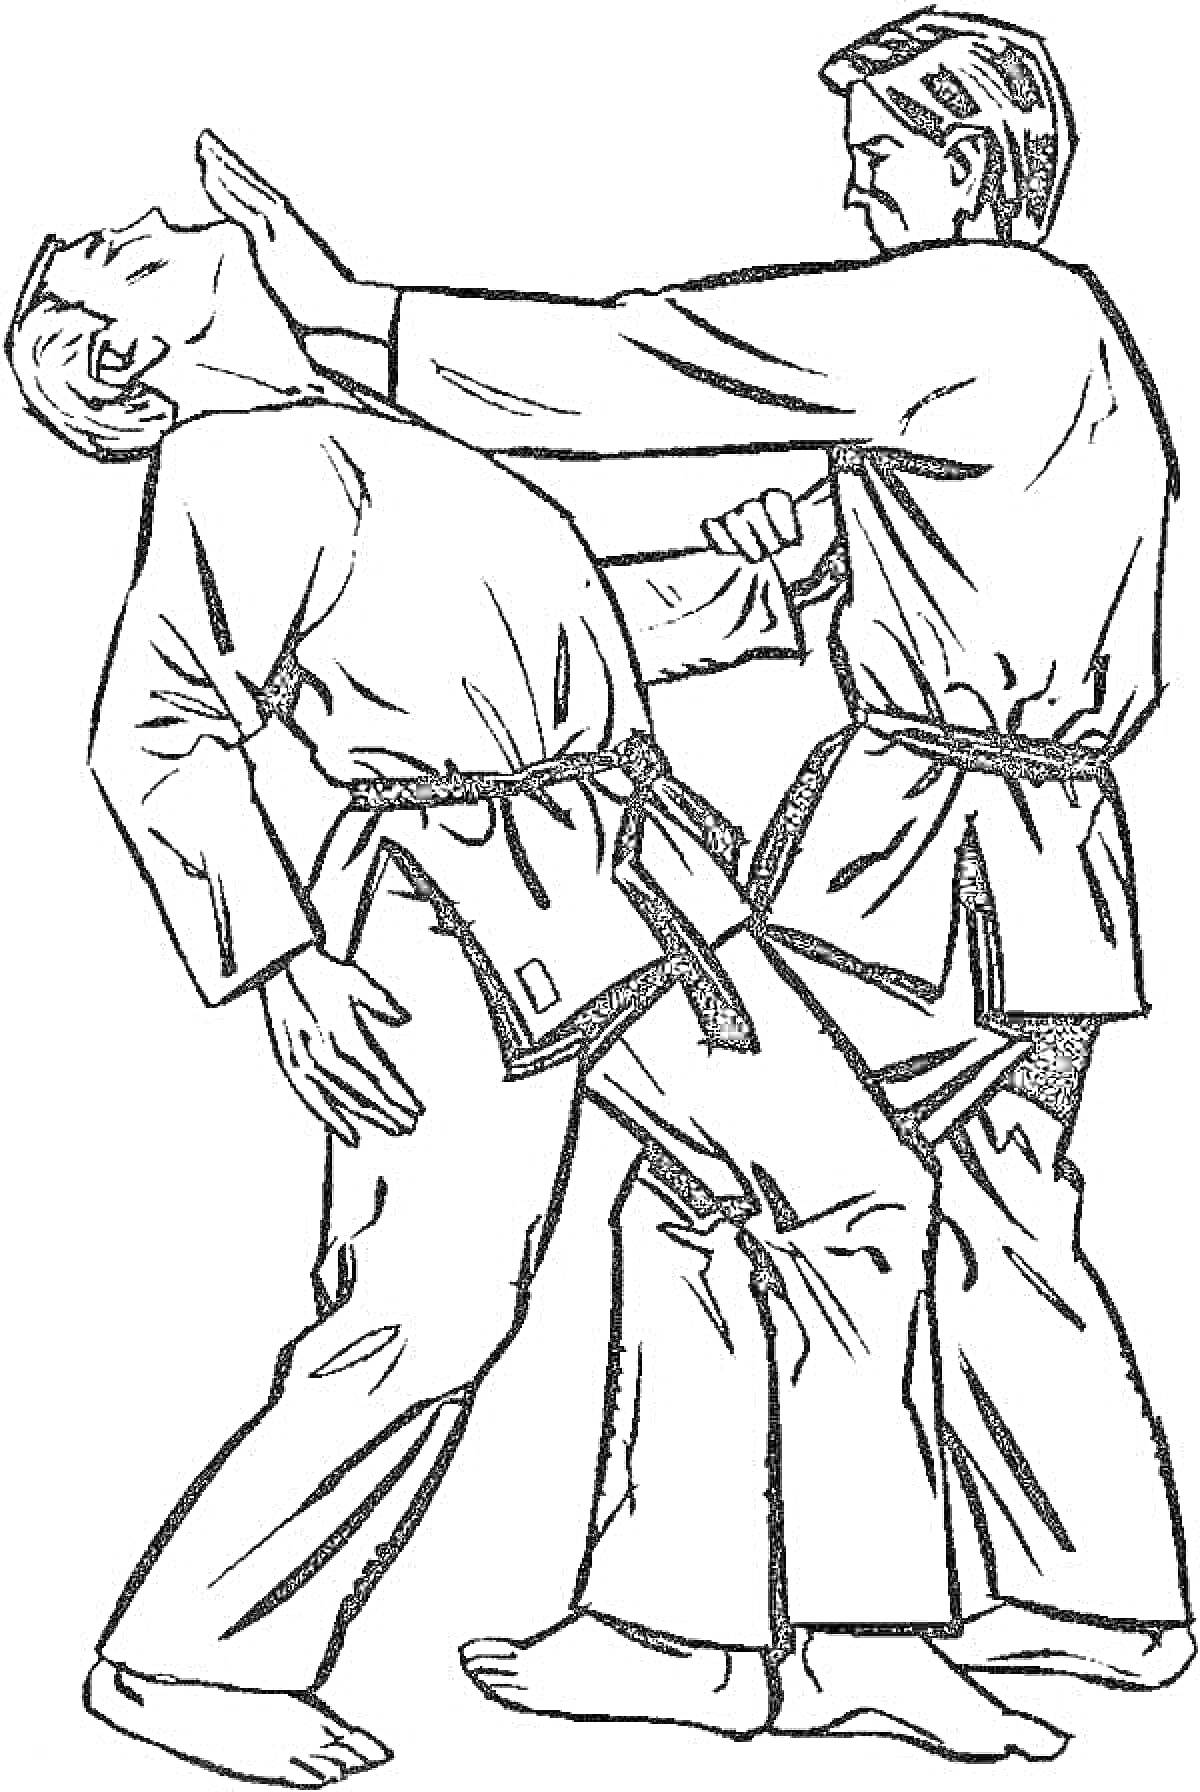 Раскраска Два человека в доги выполняют захват и удар в айкидо